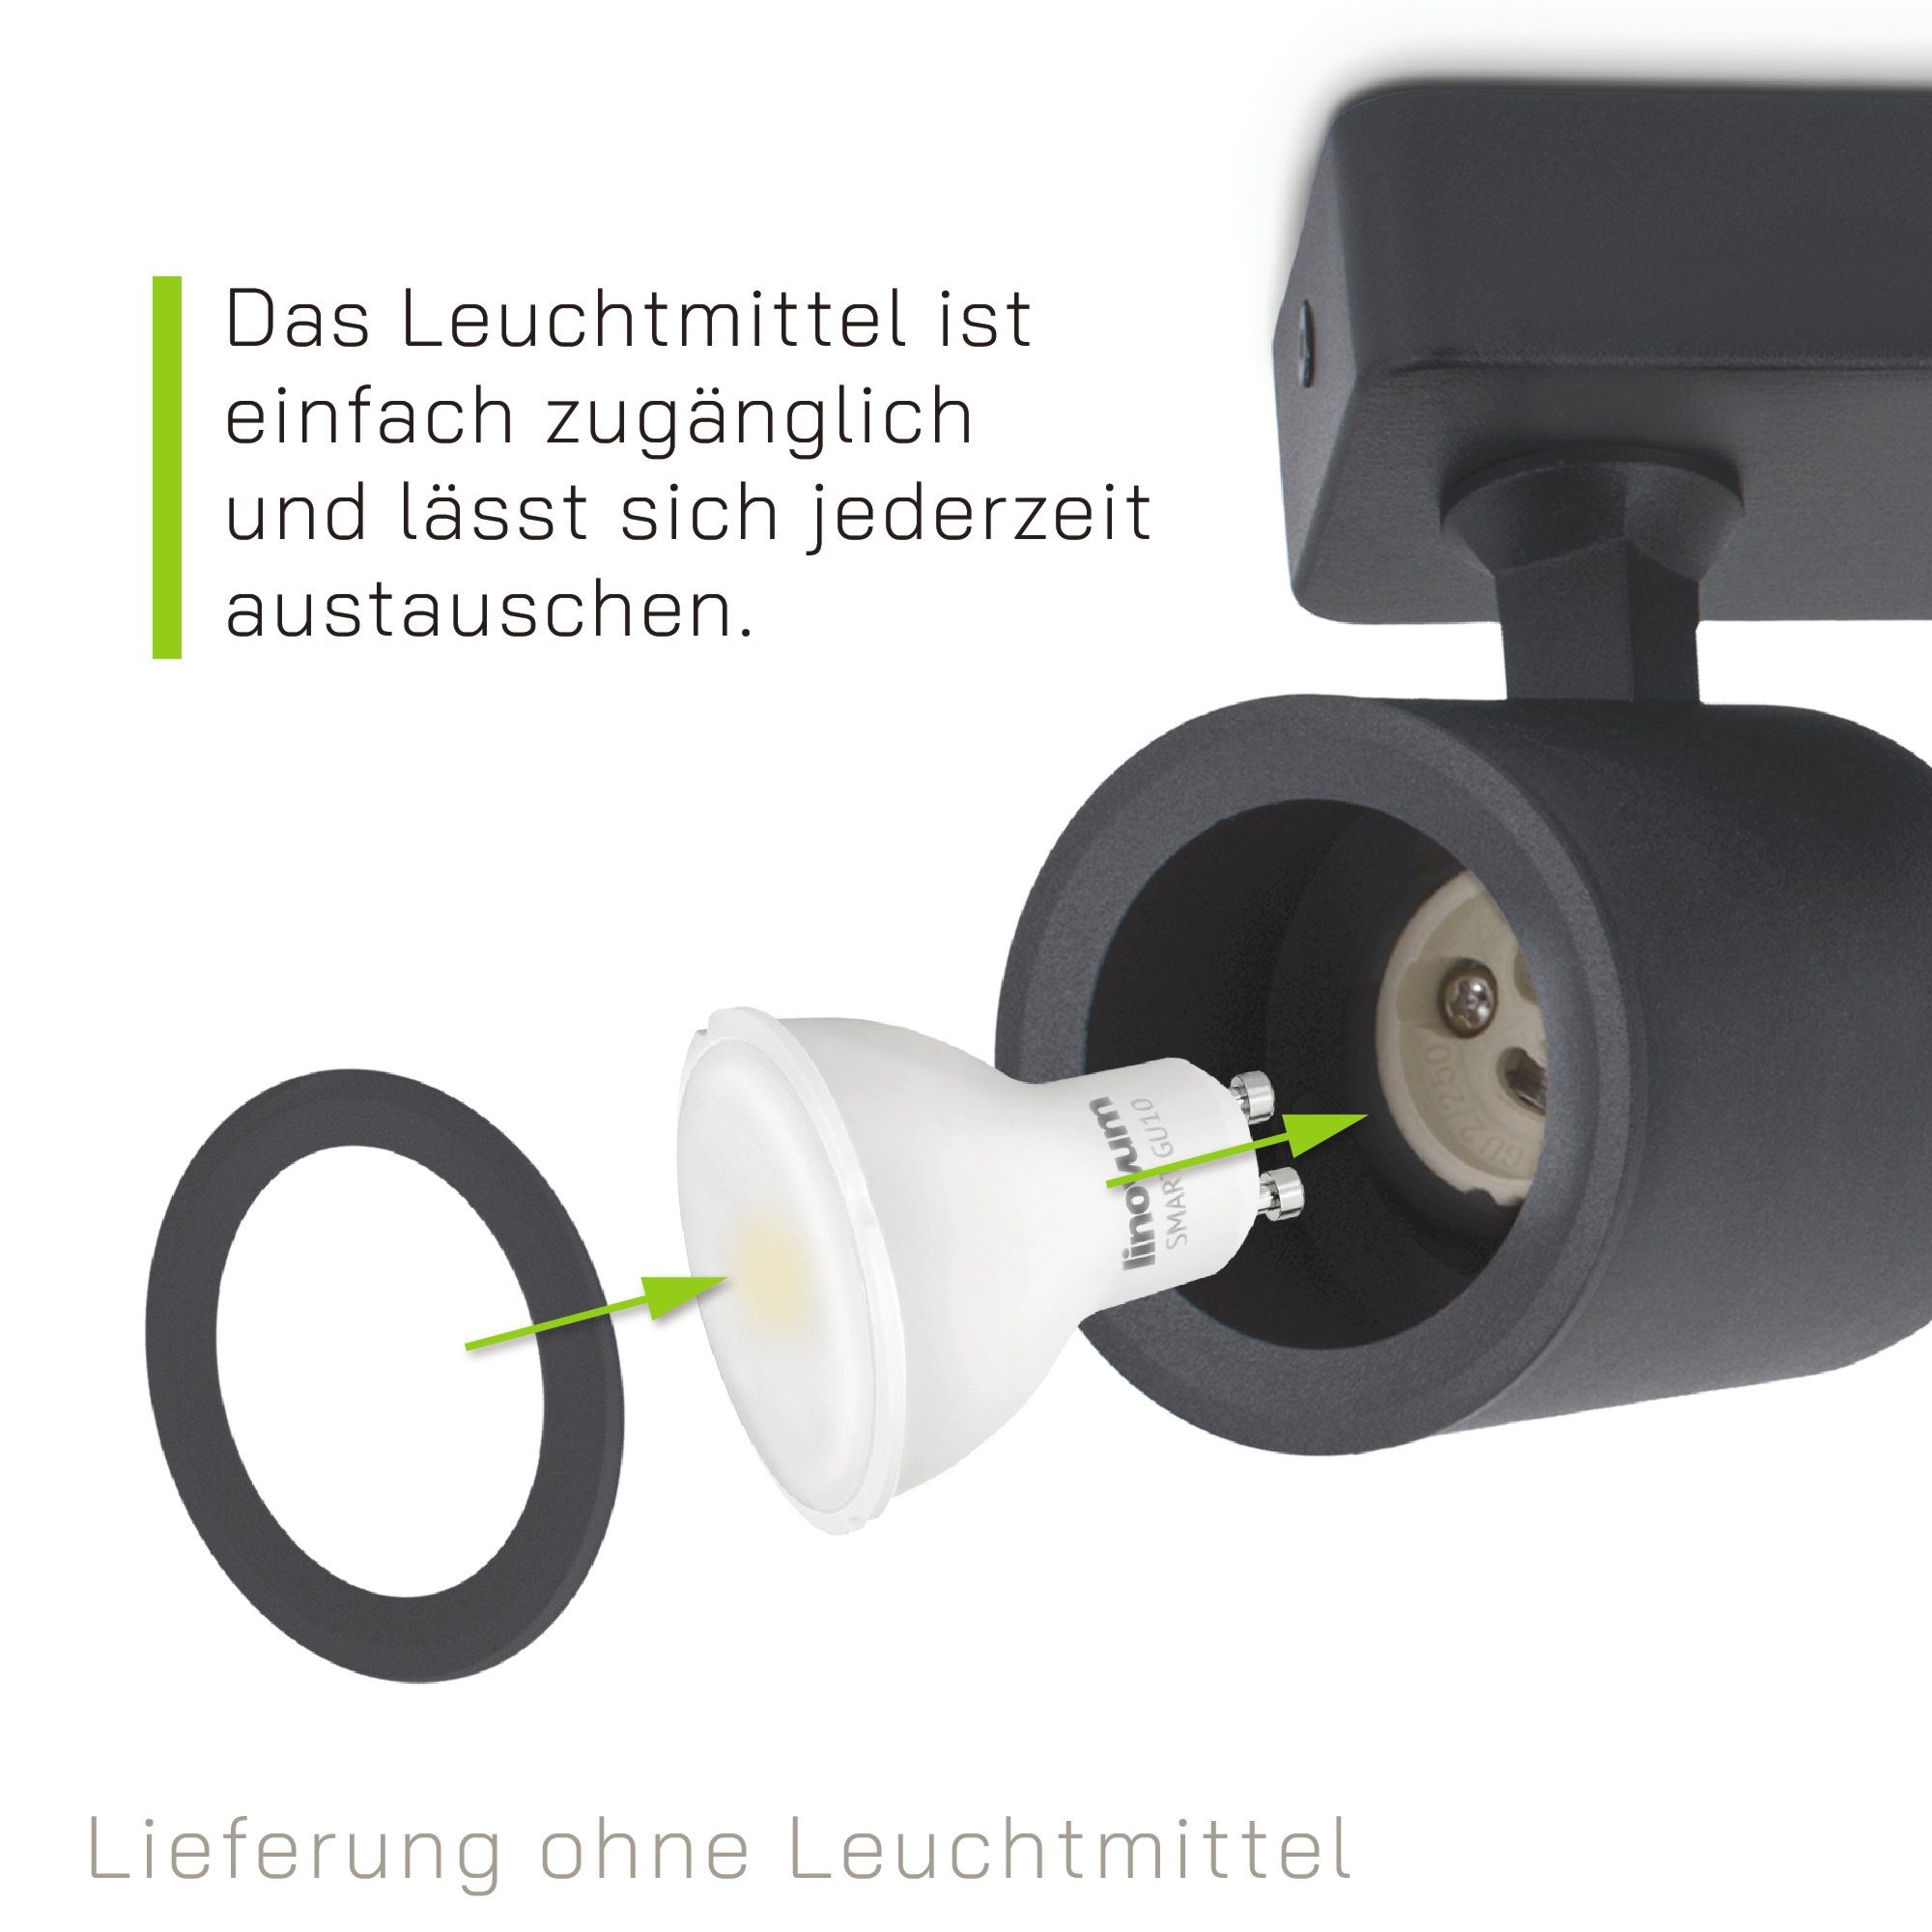 linovum LED in Aufbaustrahler Spots Leuchtmittel nicht schwenkbar, inklusive inklusive, nicht 2-flammig drehbar & schwarz Leuchtmittel Spotbalken TENJO